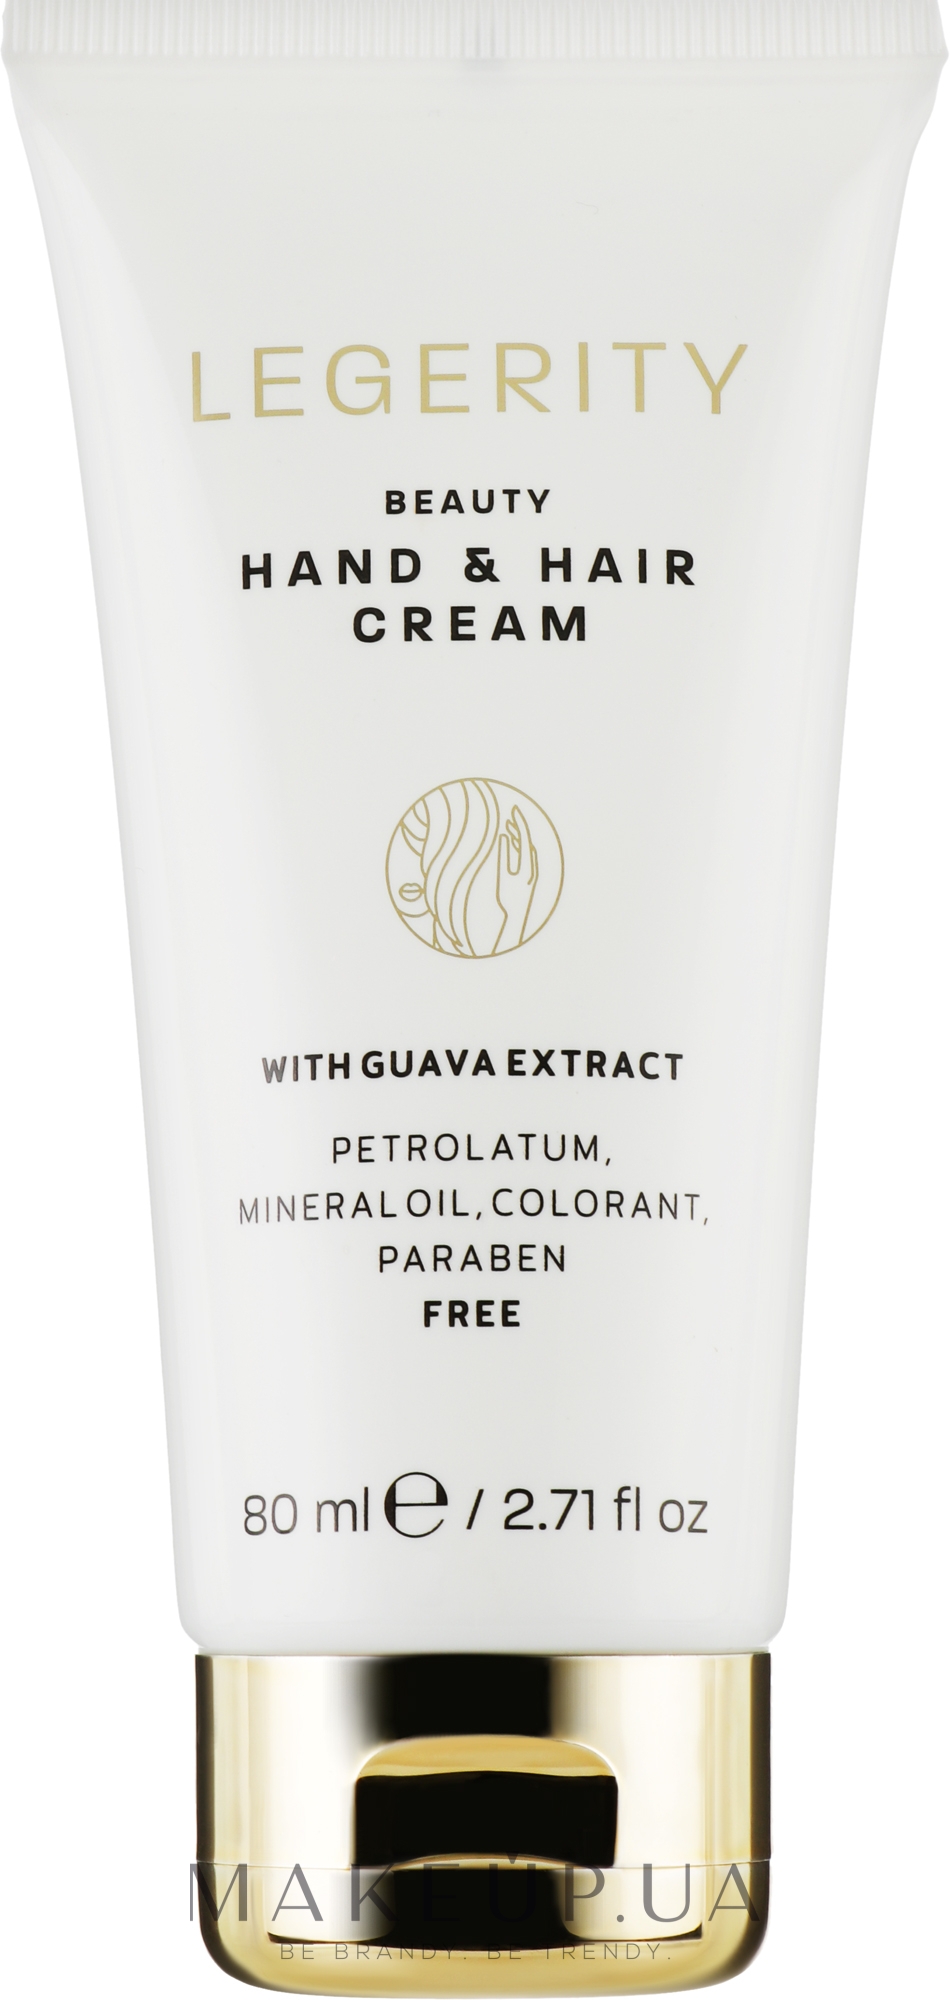 Багатофункціональний крем для рук і волосся - Screen Legerity Beauty Hand & Hair Cream — фото 80ml